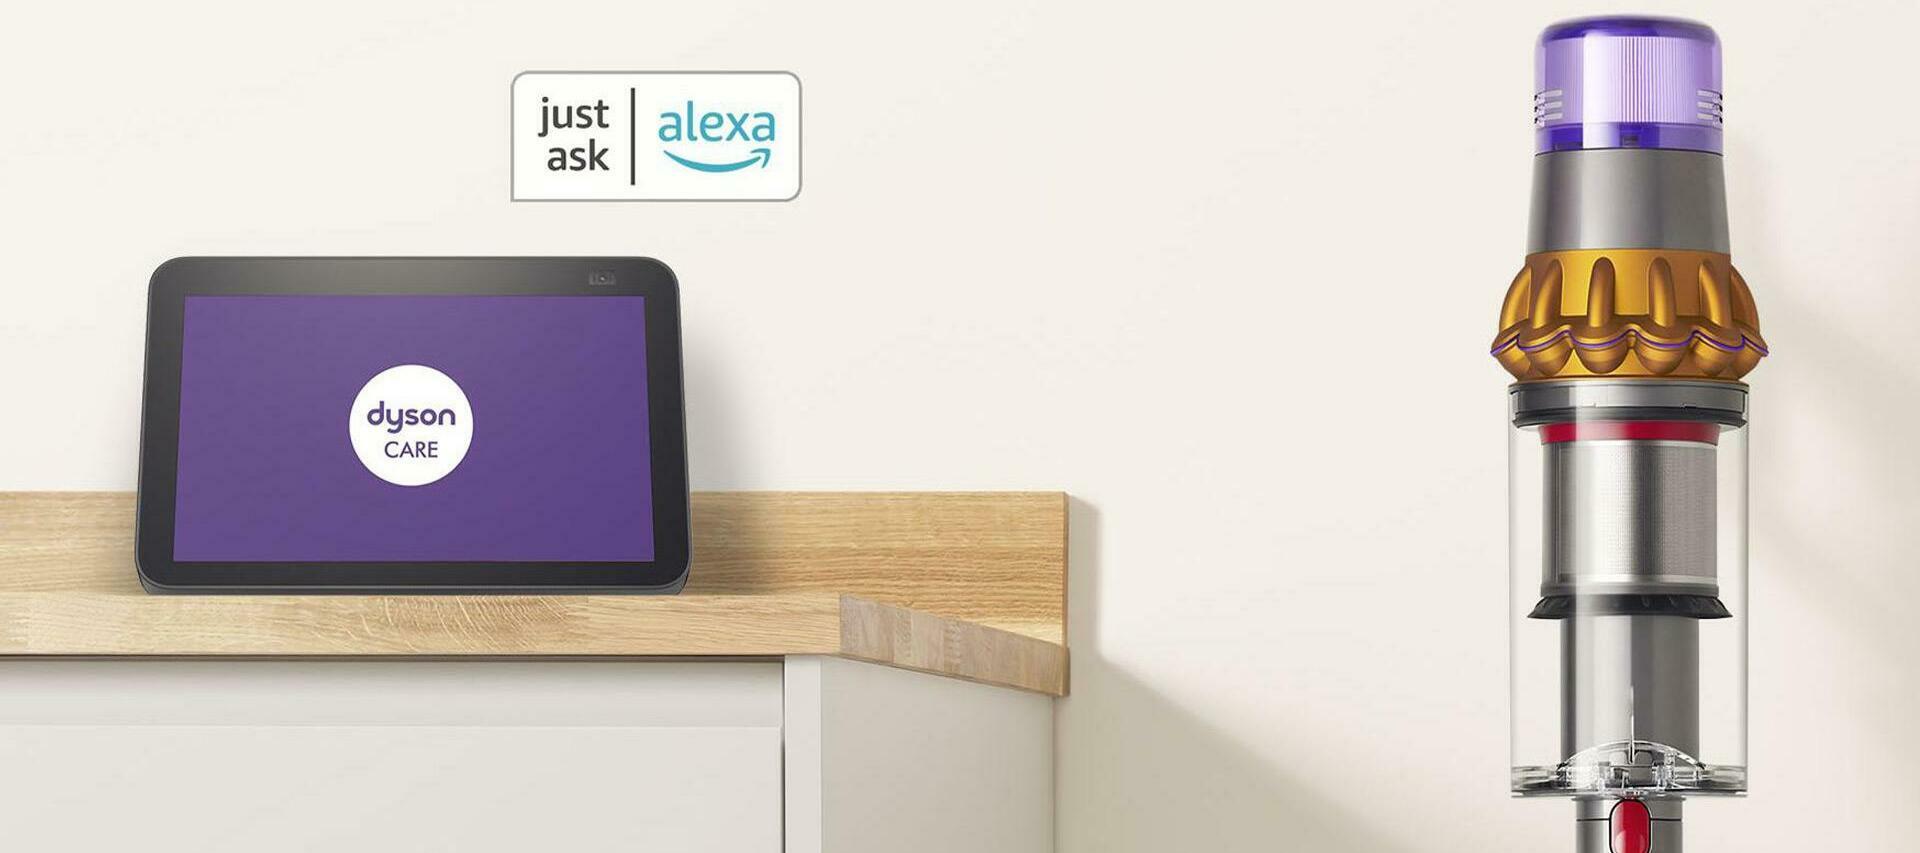 Dyson US launches Dyson Care: An Amazon Alexa voice skill